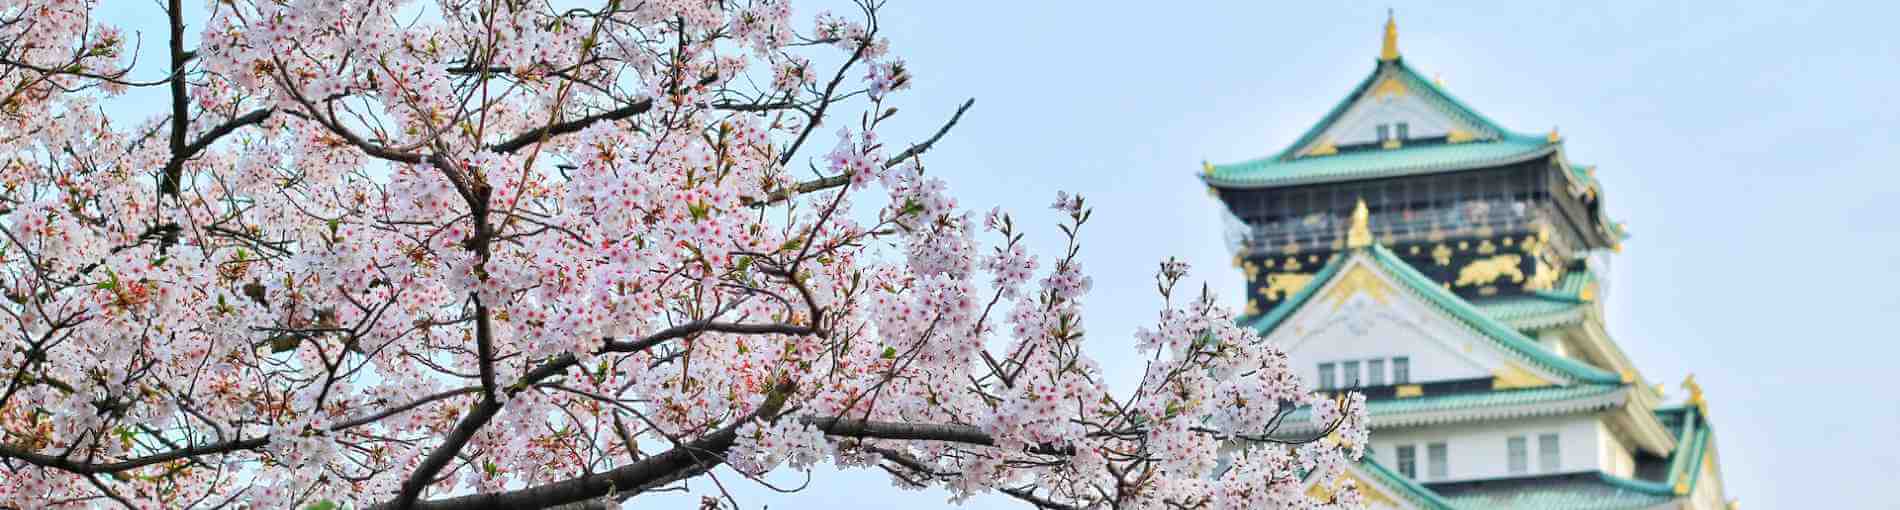 Japanese blossom trees